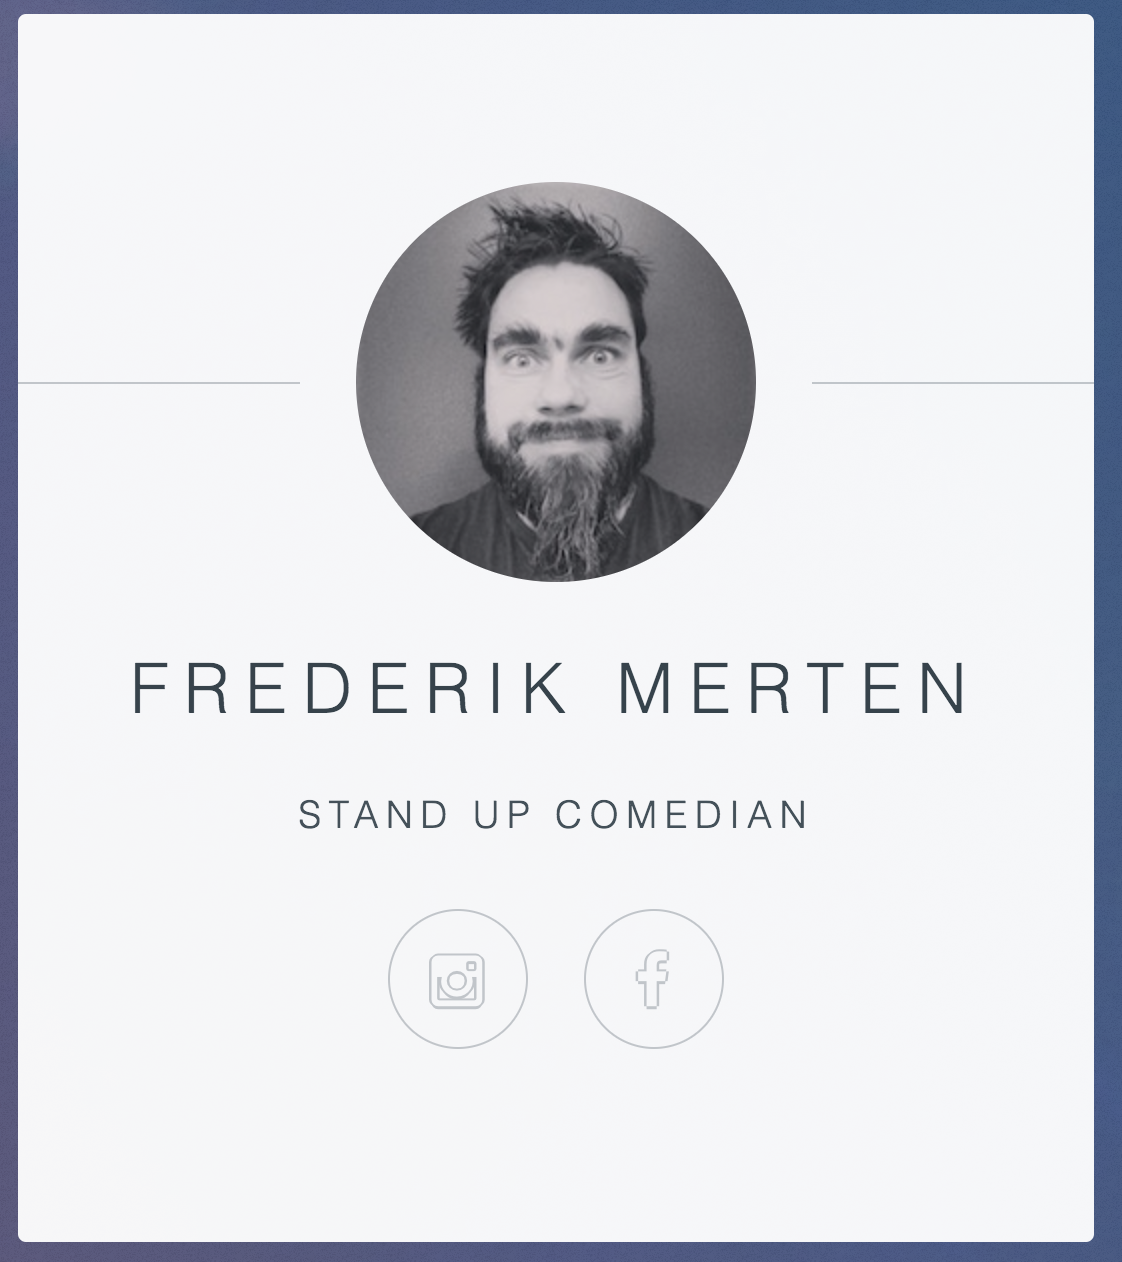 Frederik Merten, Comedian